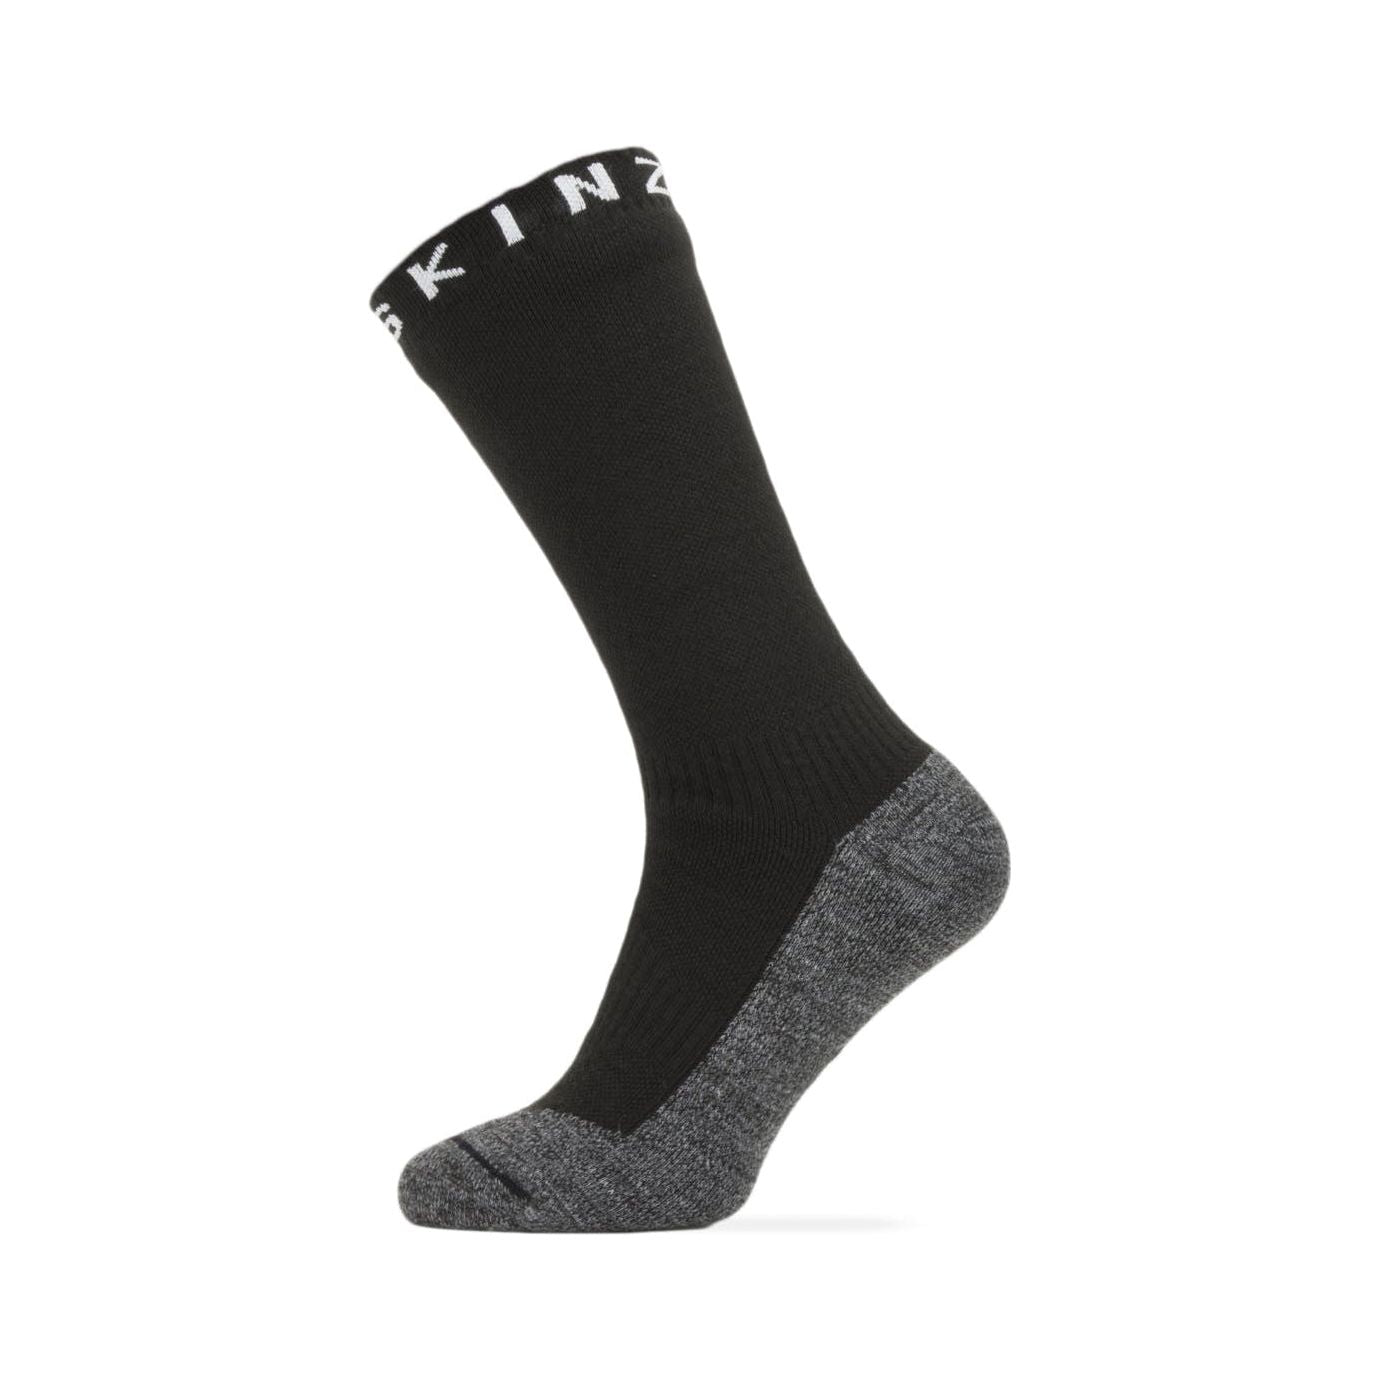 Sealskinz Nordelph Waterproof Warm Weather Soft Touch Mid Length Sock Black/Grey